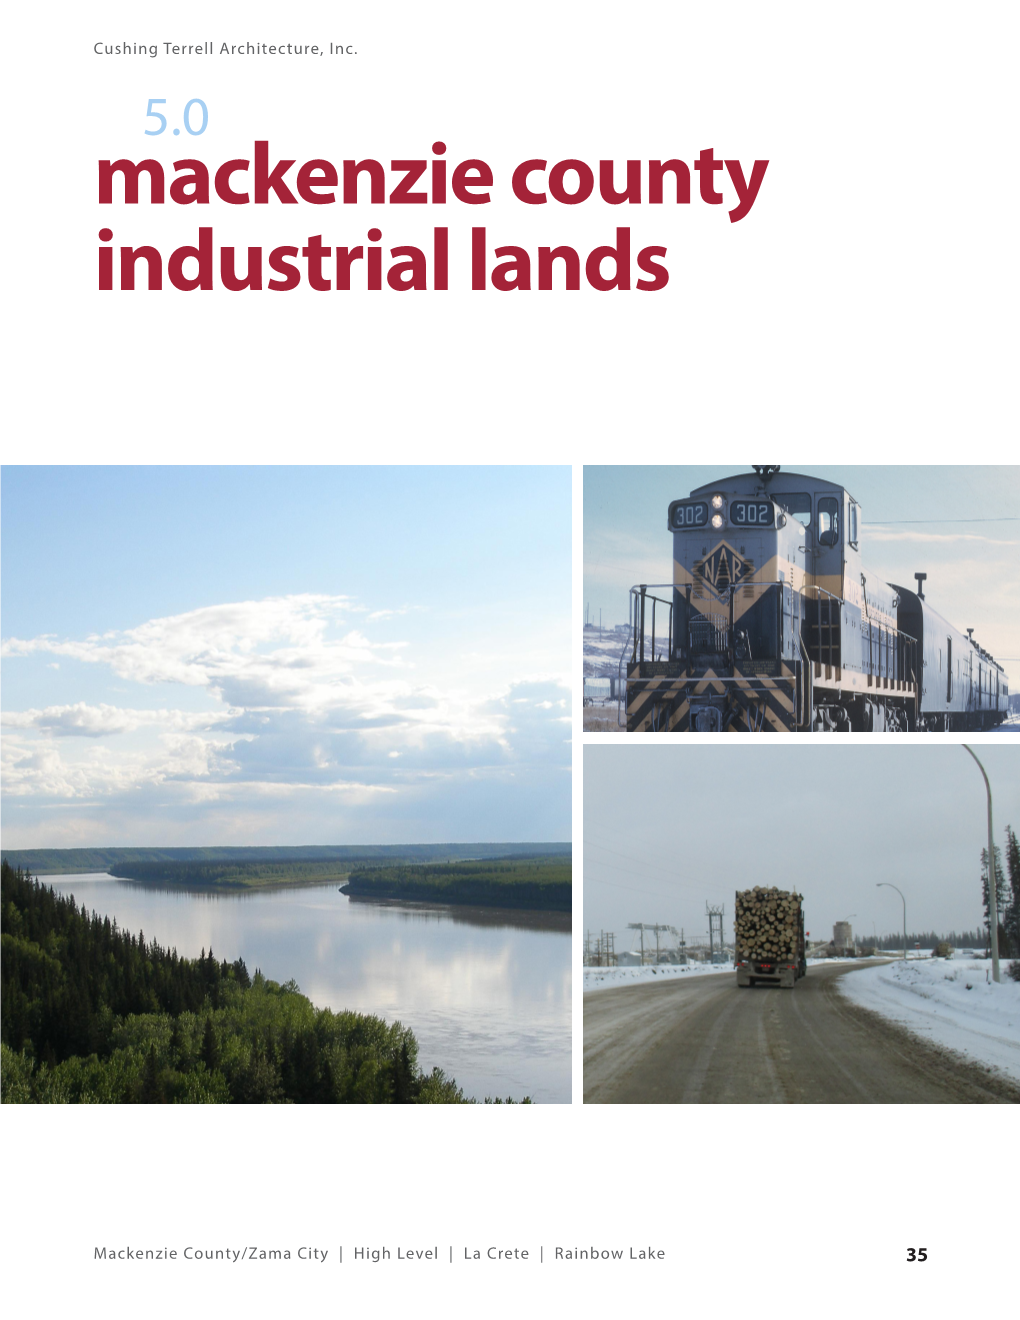 Mackenzie County Industrial Lands